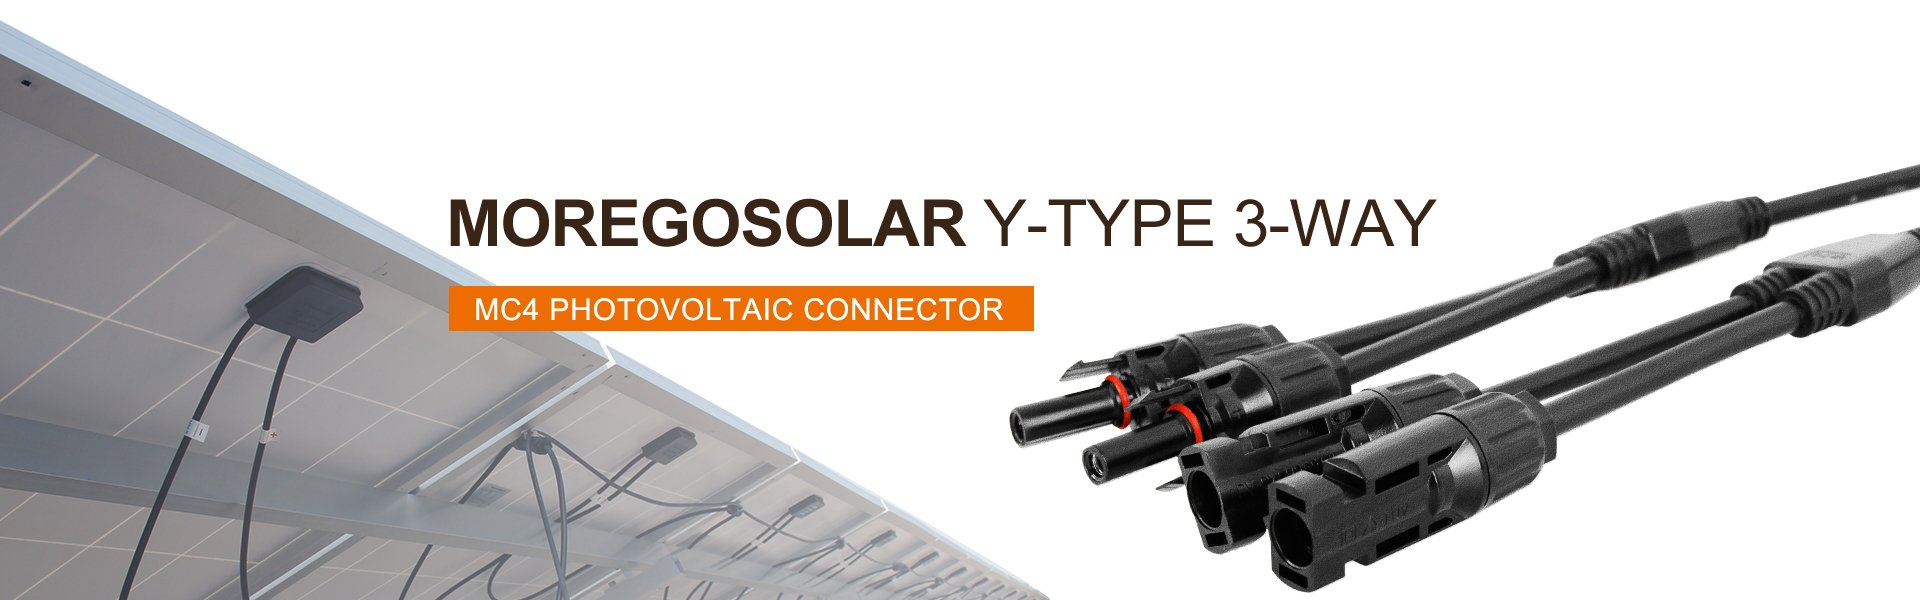 Y-type 3-way MC4 photovoltaic connector price